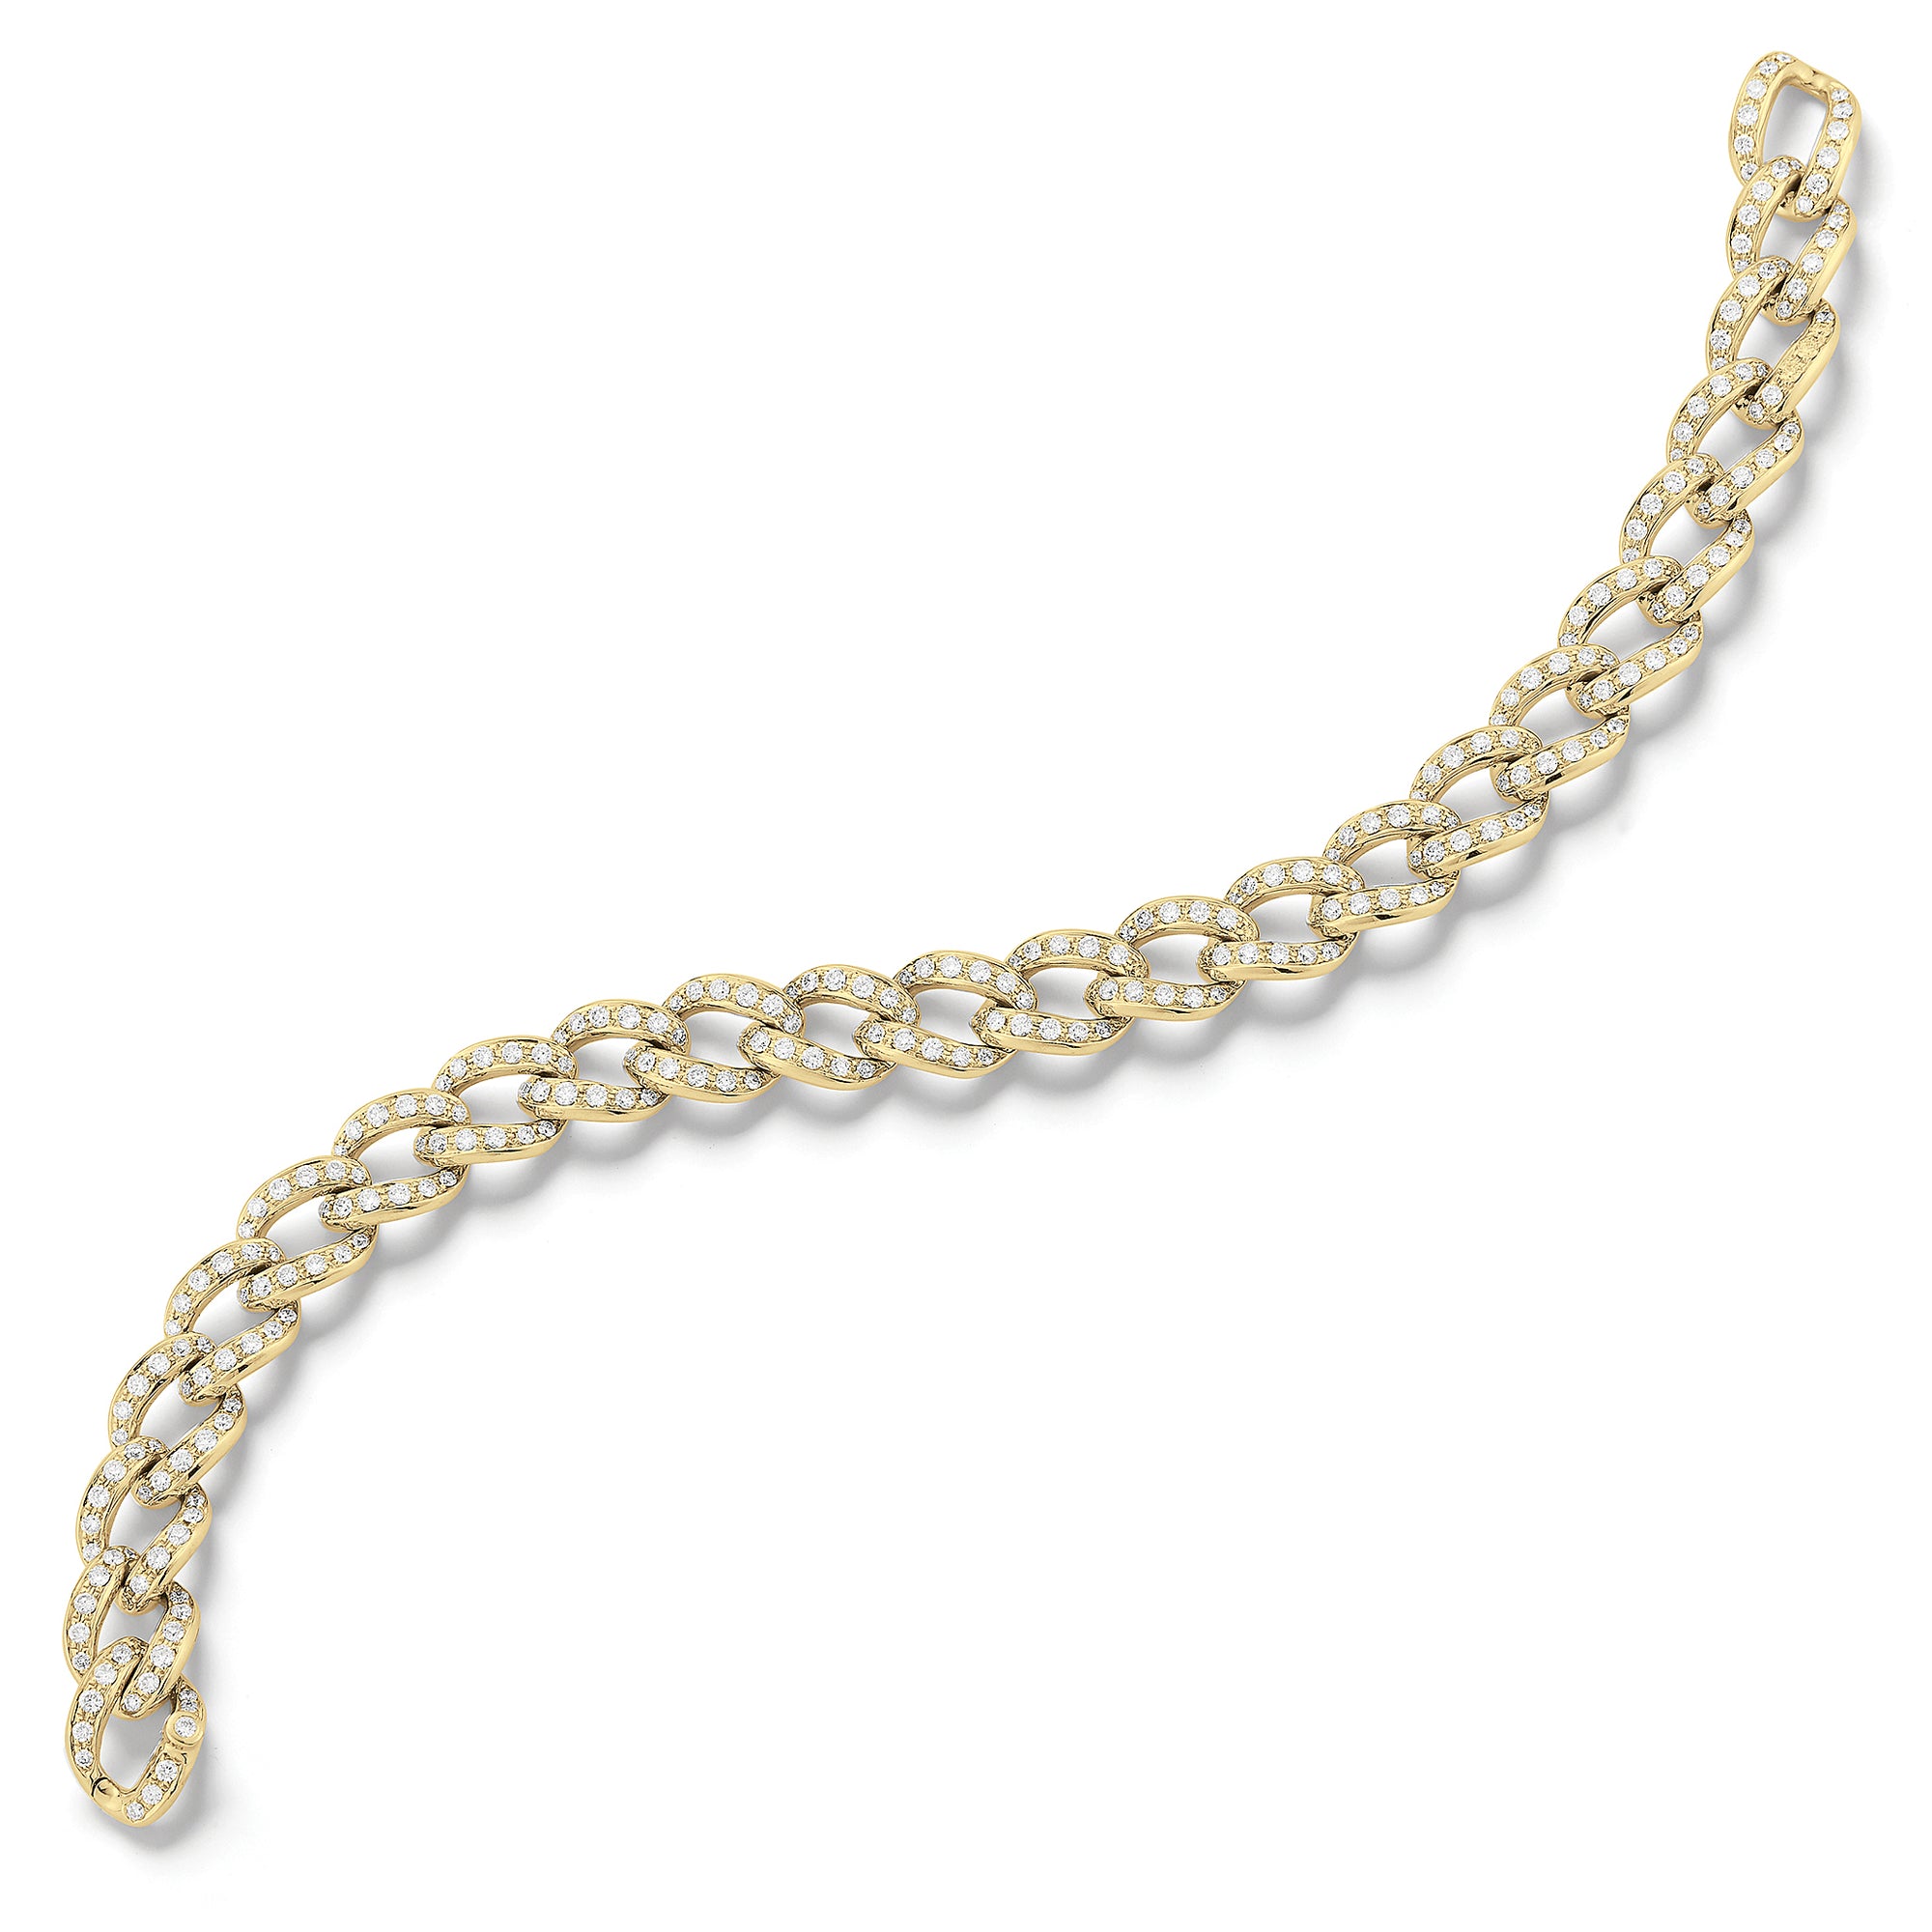 Diamond Woven Link Bracelet -18K yellow gold weighing 24.14 grams -288 round diamonds totaling 3.53 carats